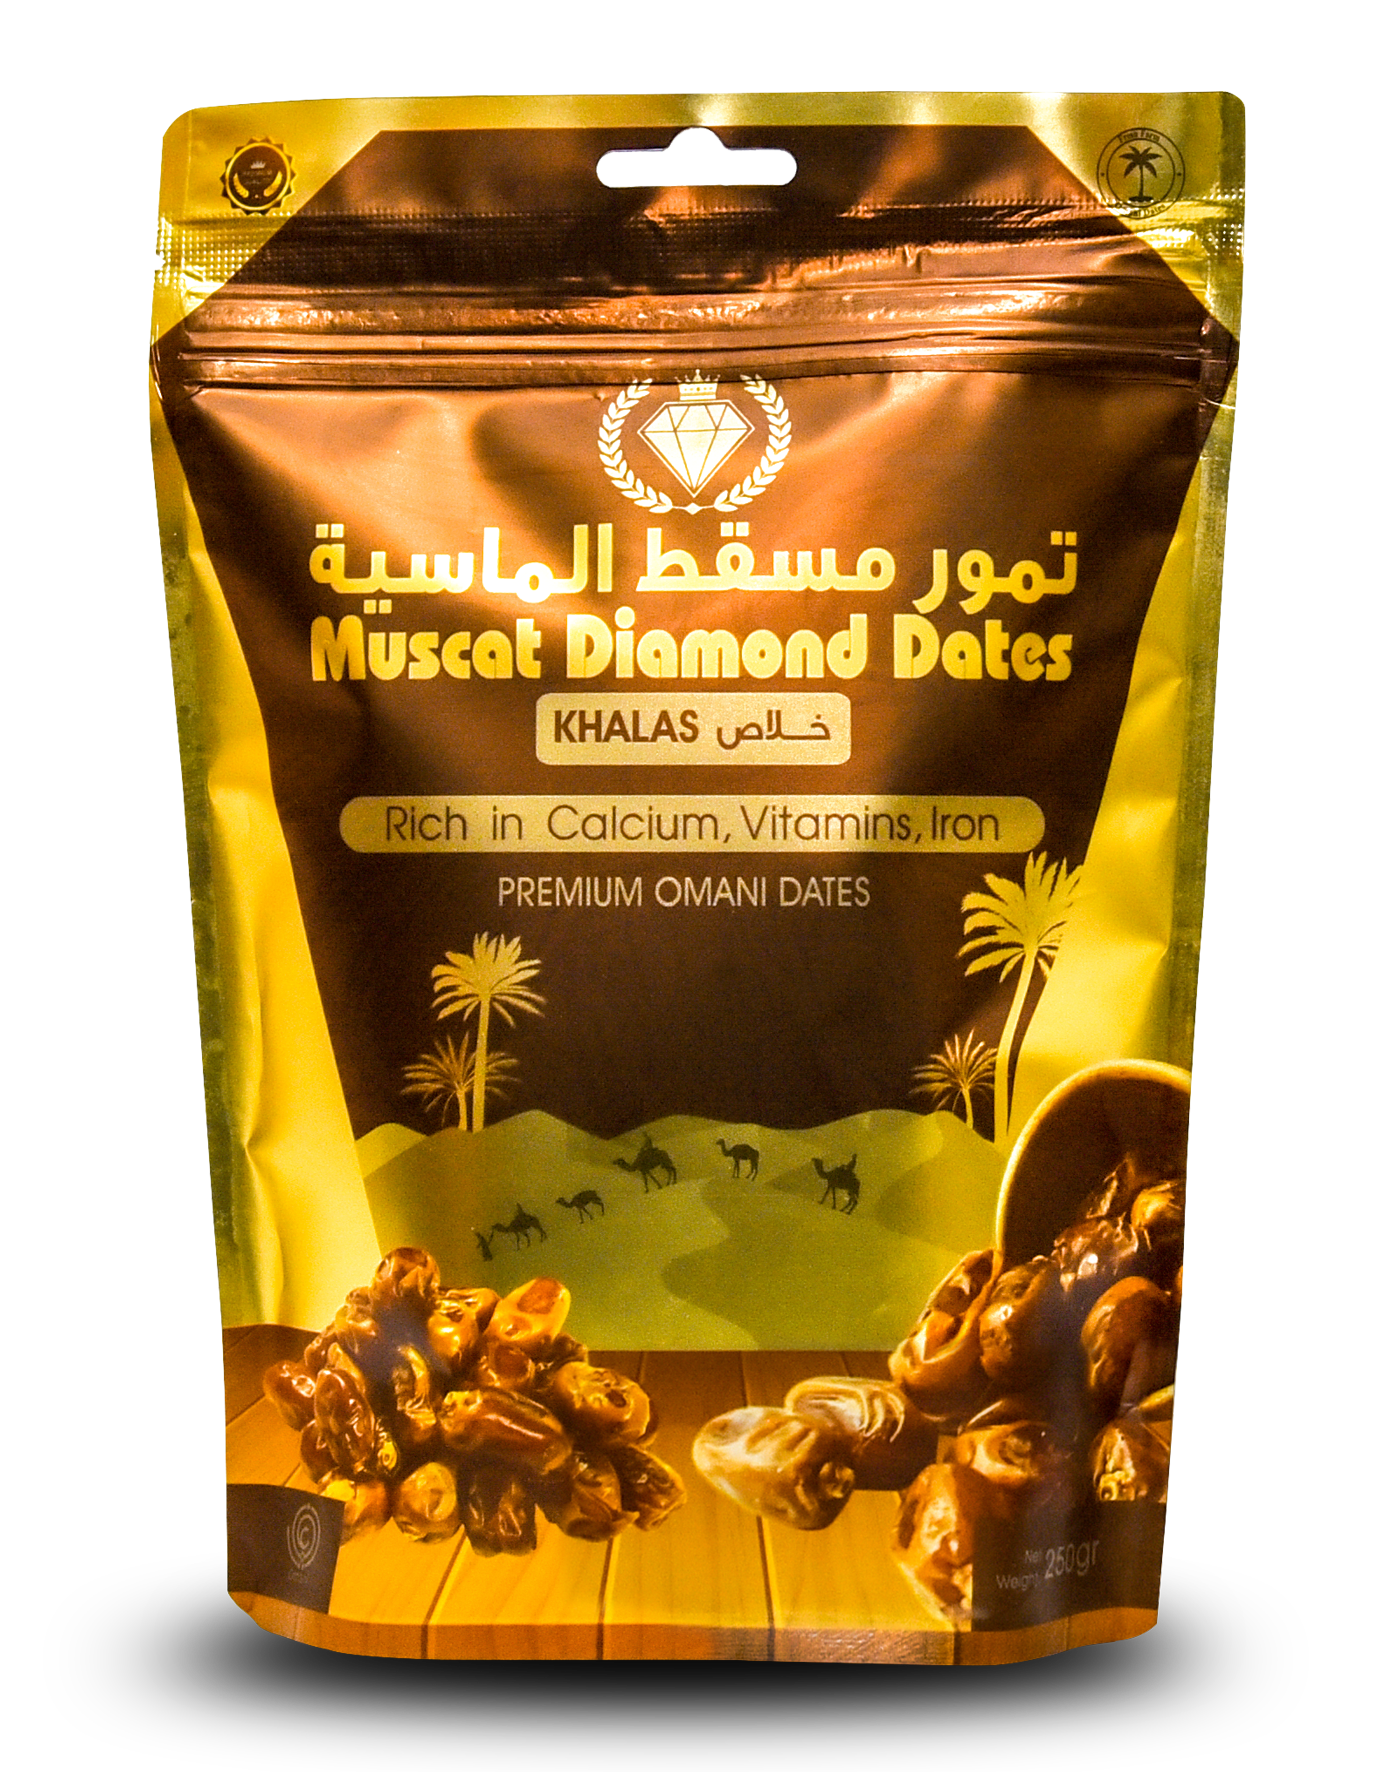 Muscat Diamond Dates Khalas